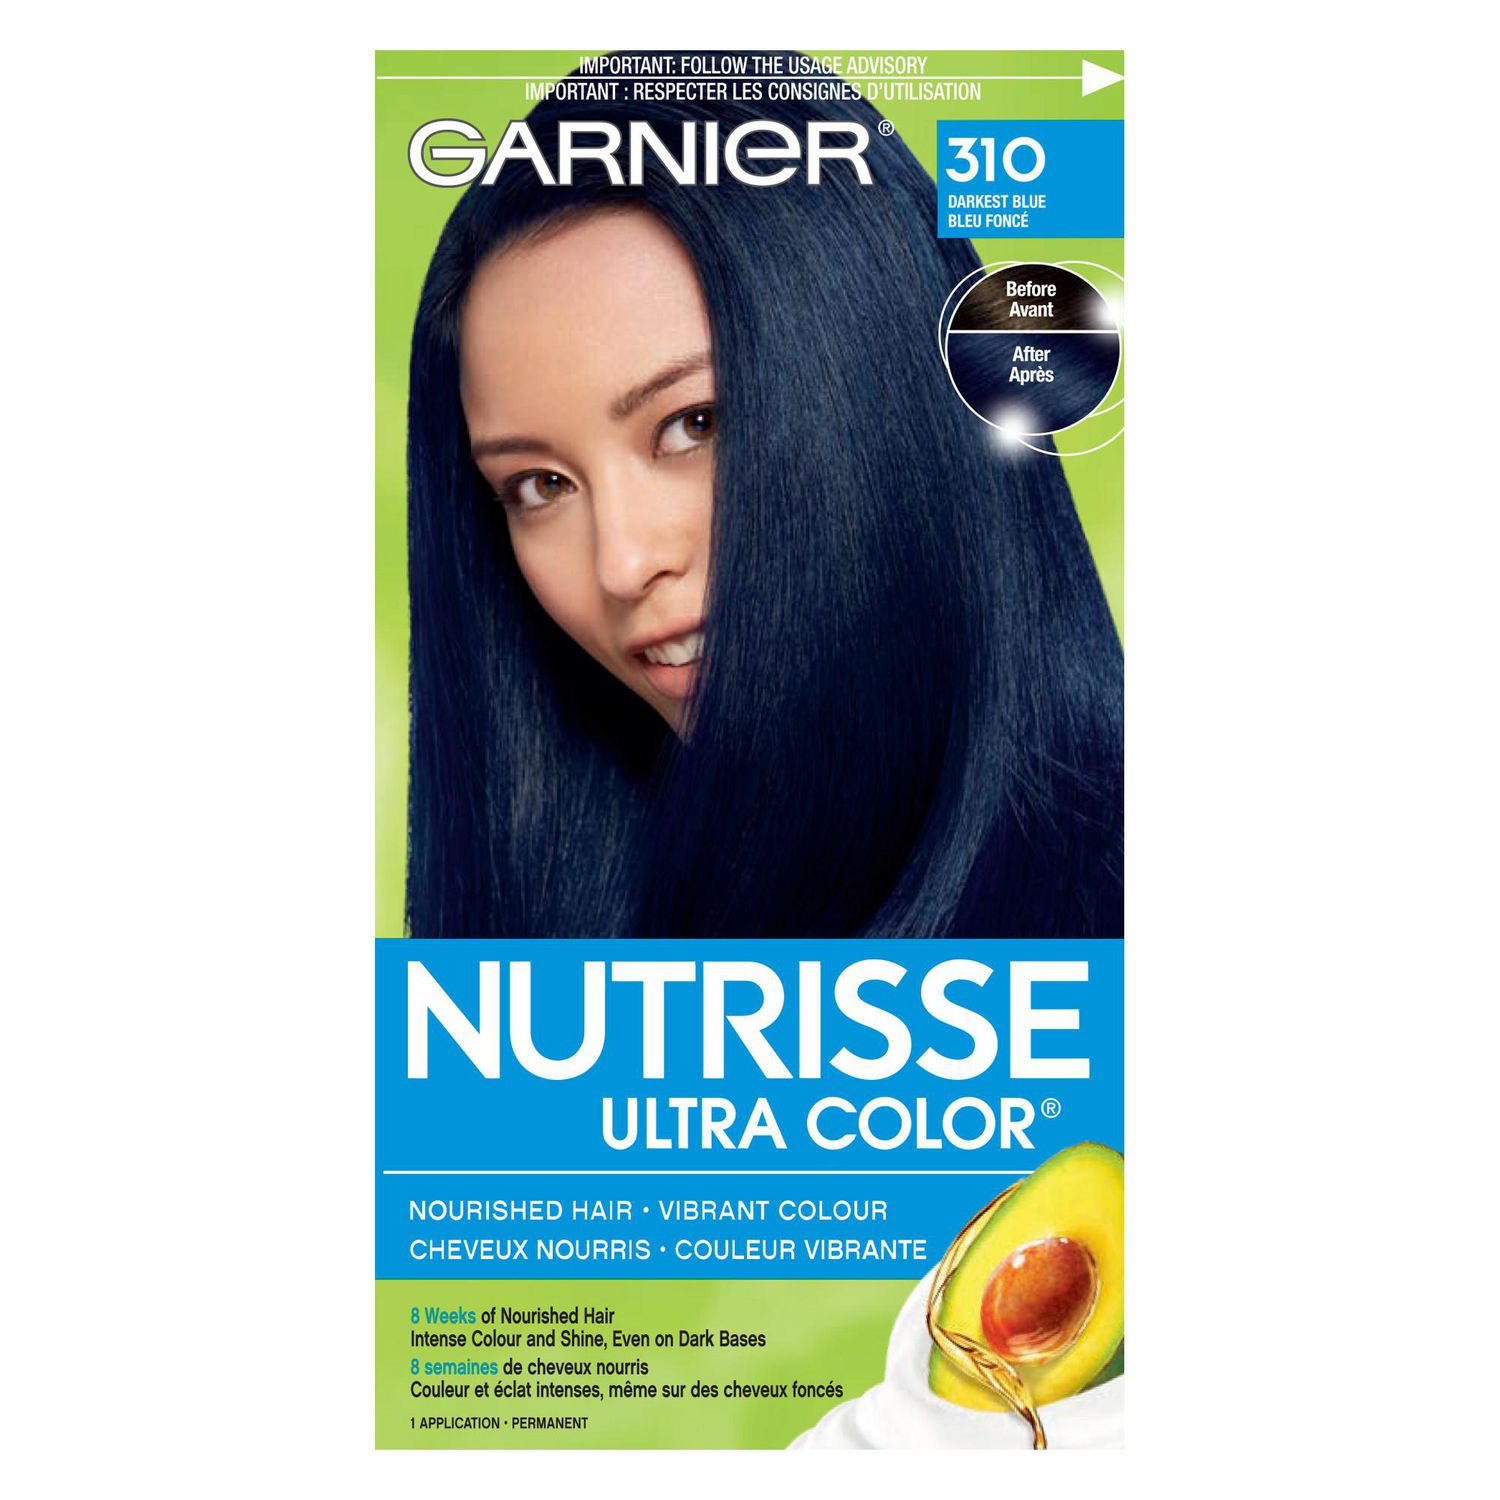 Garnier Nutrisse Ultra Color Darkest Blue 310 Walmart Canada